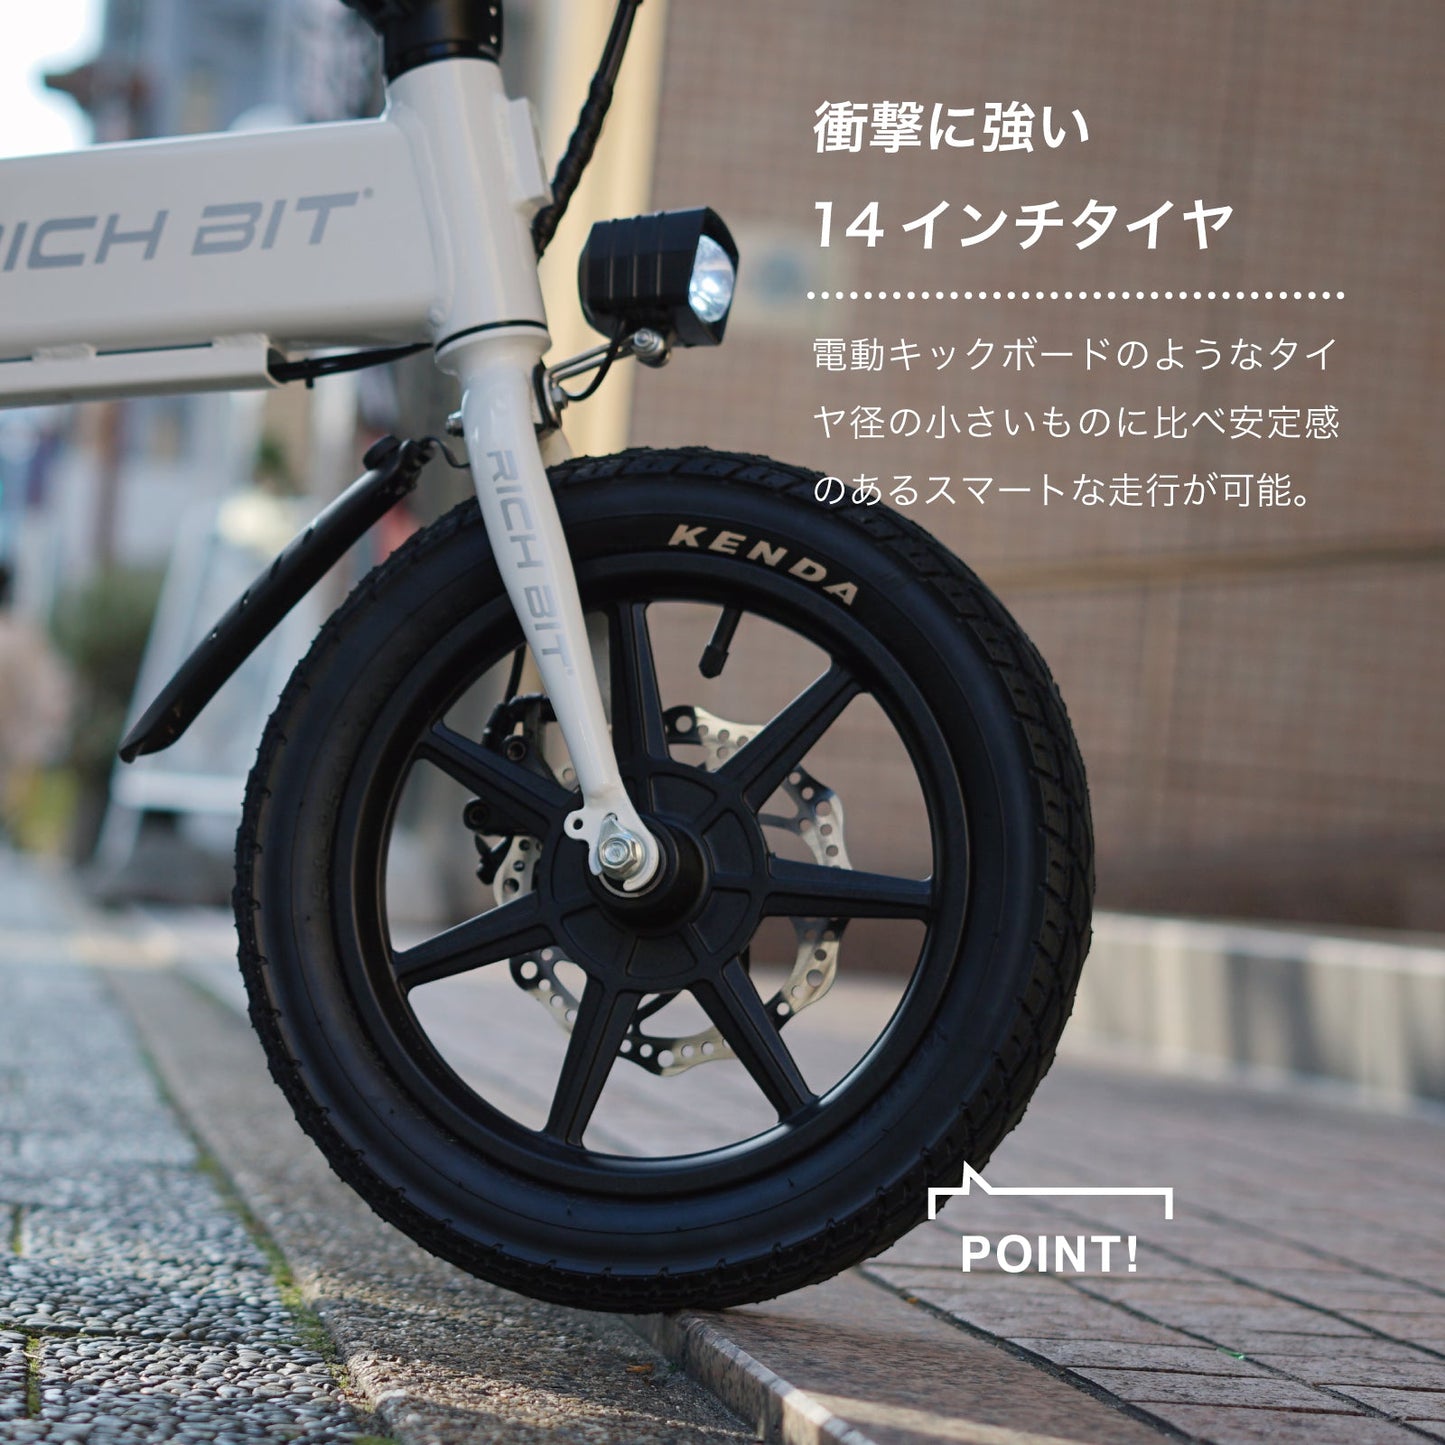 RICHBIT CITY ASSIST（レンジャーグリーン）電動アシスト自転車  型式認定取得済【予約購入/25%OFF】